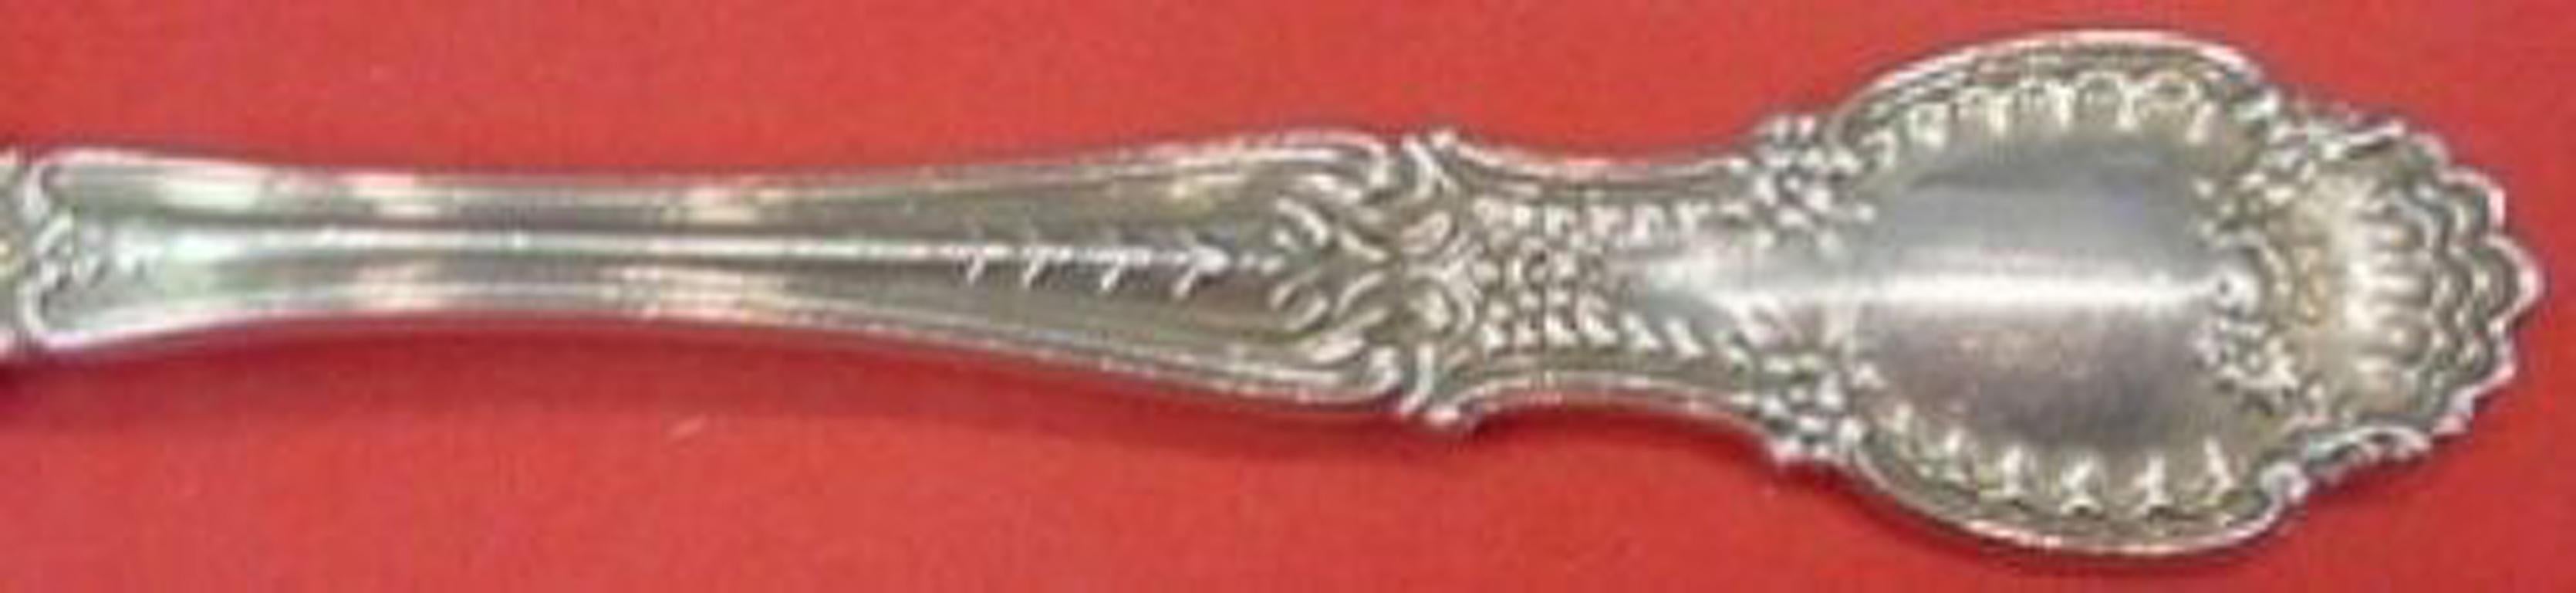 Sterling silver fish fork 7